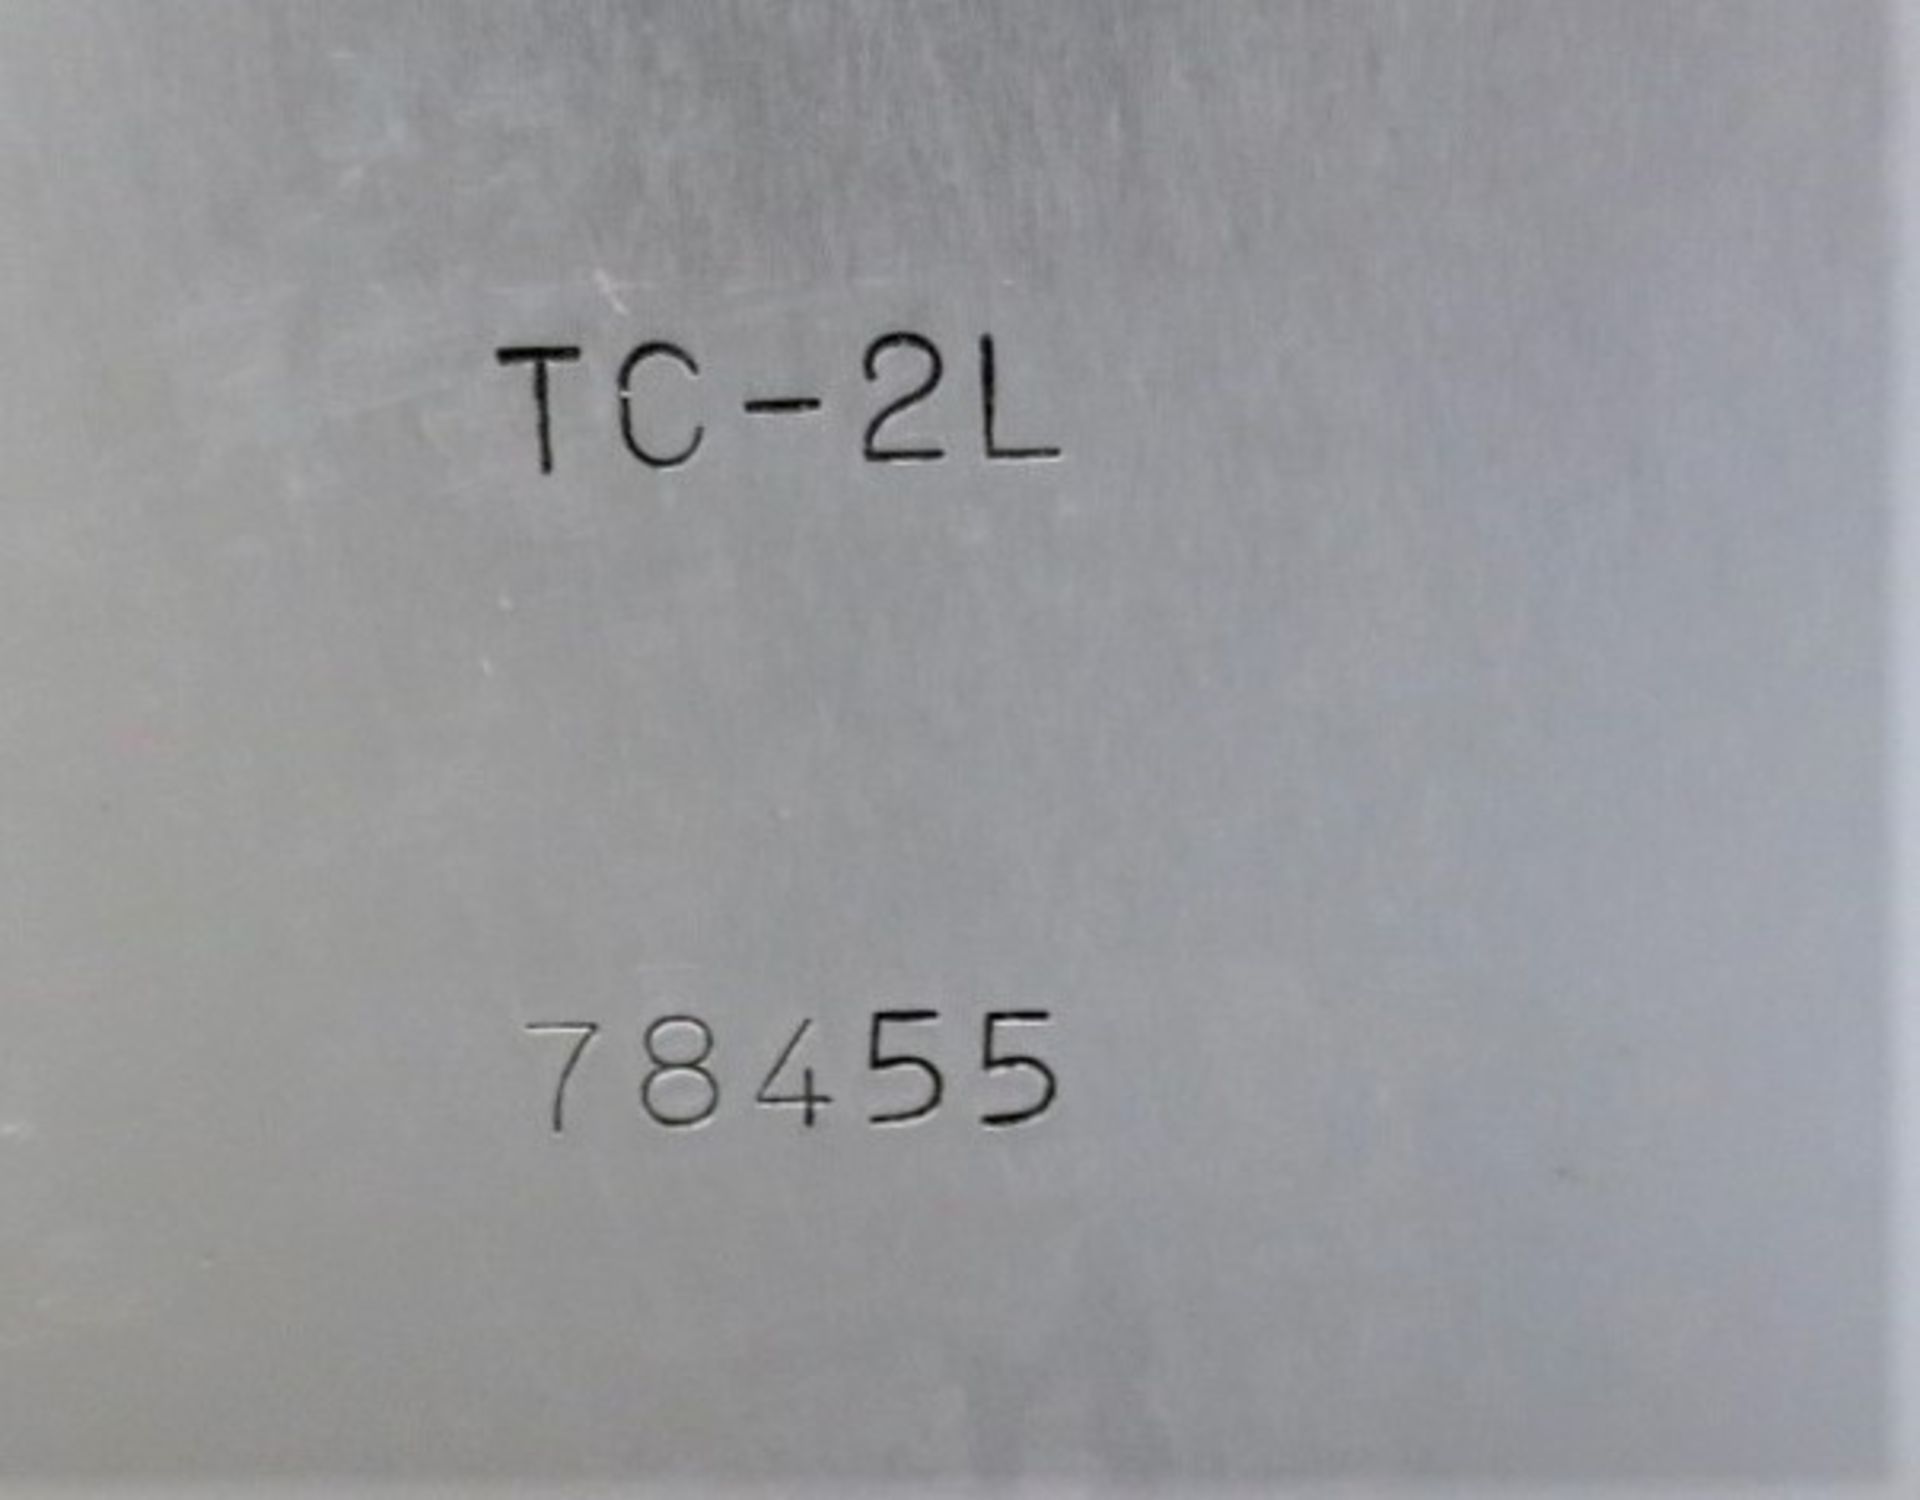 Amera Seiki TC-2L CNC Lathe, S/N 78455 - Image 7 of 7